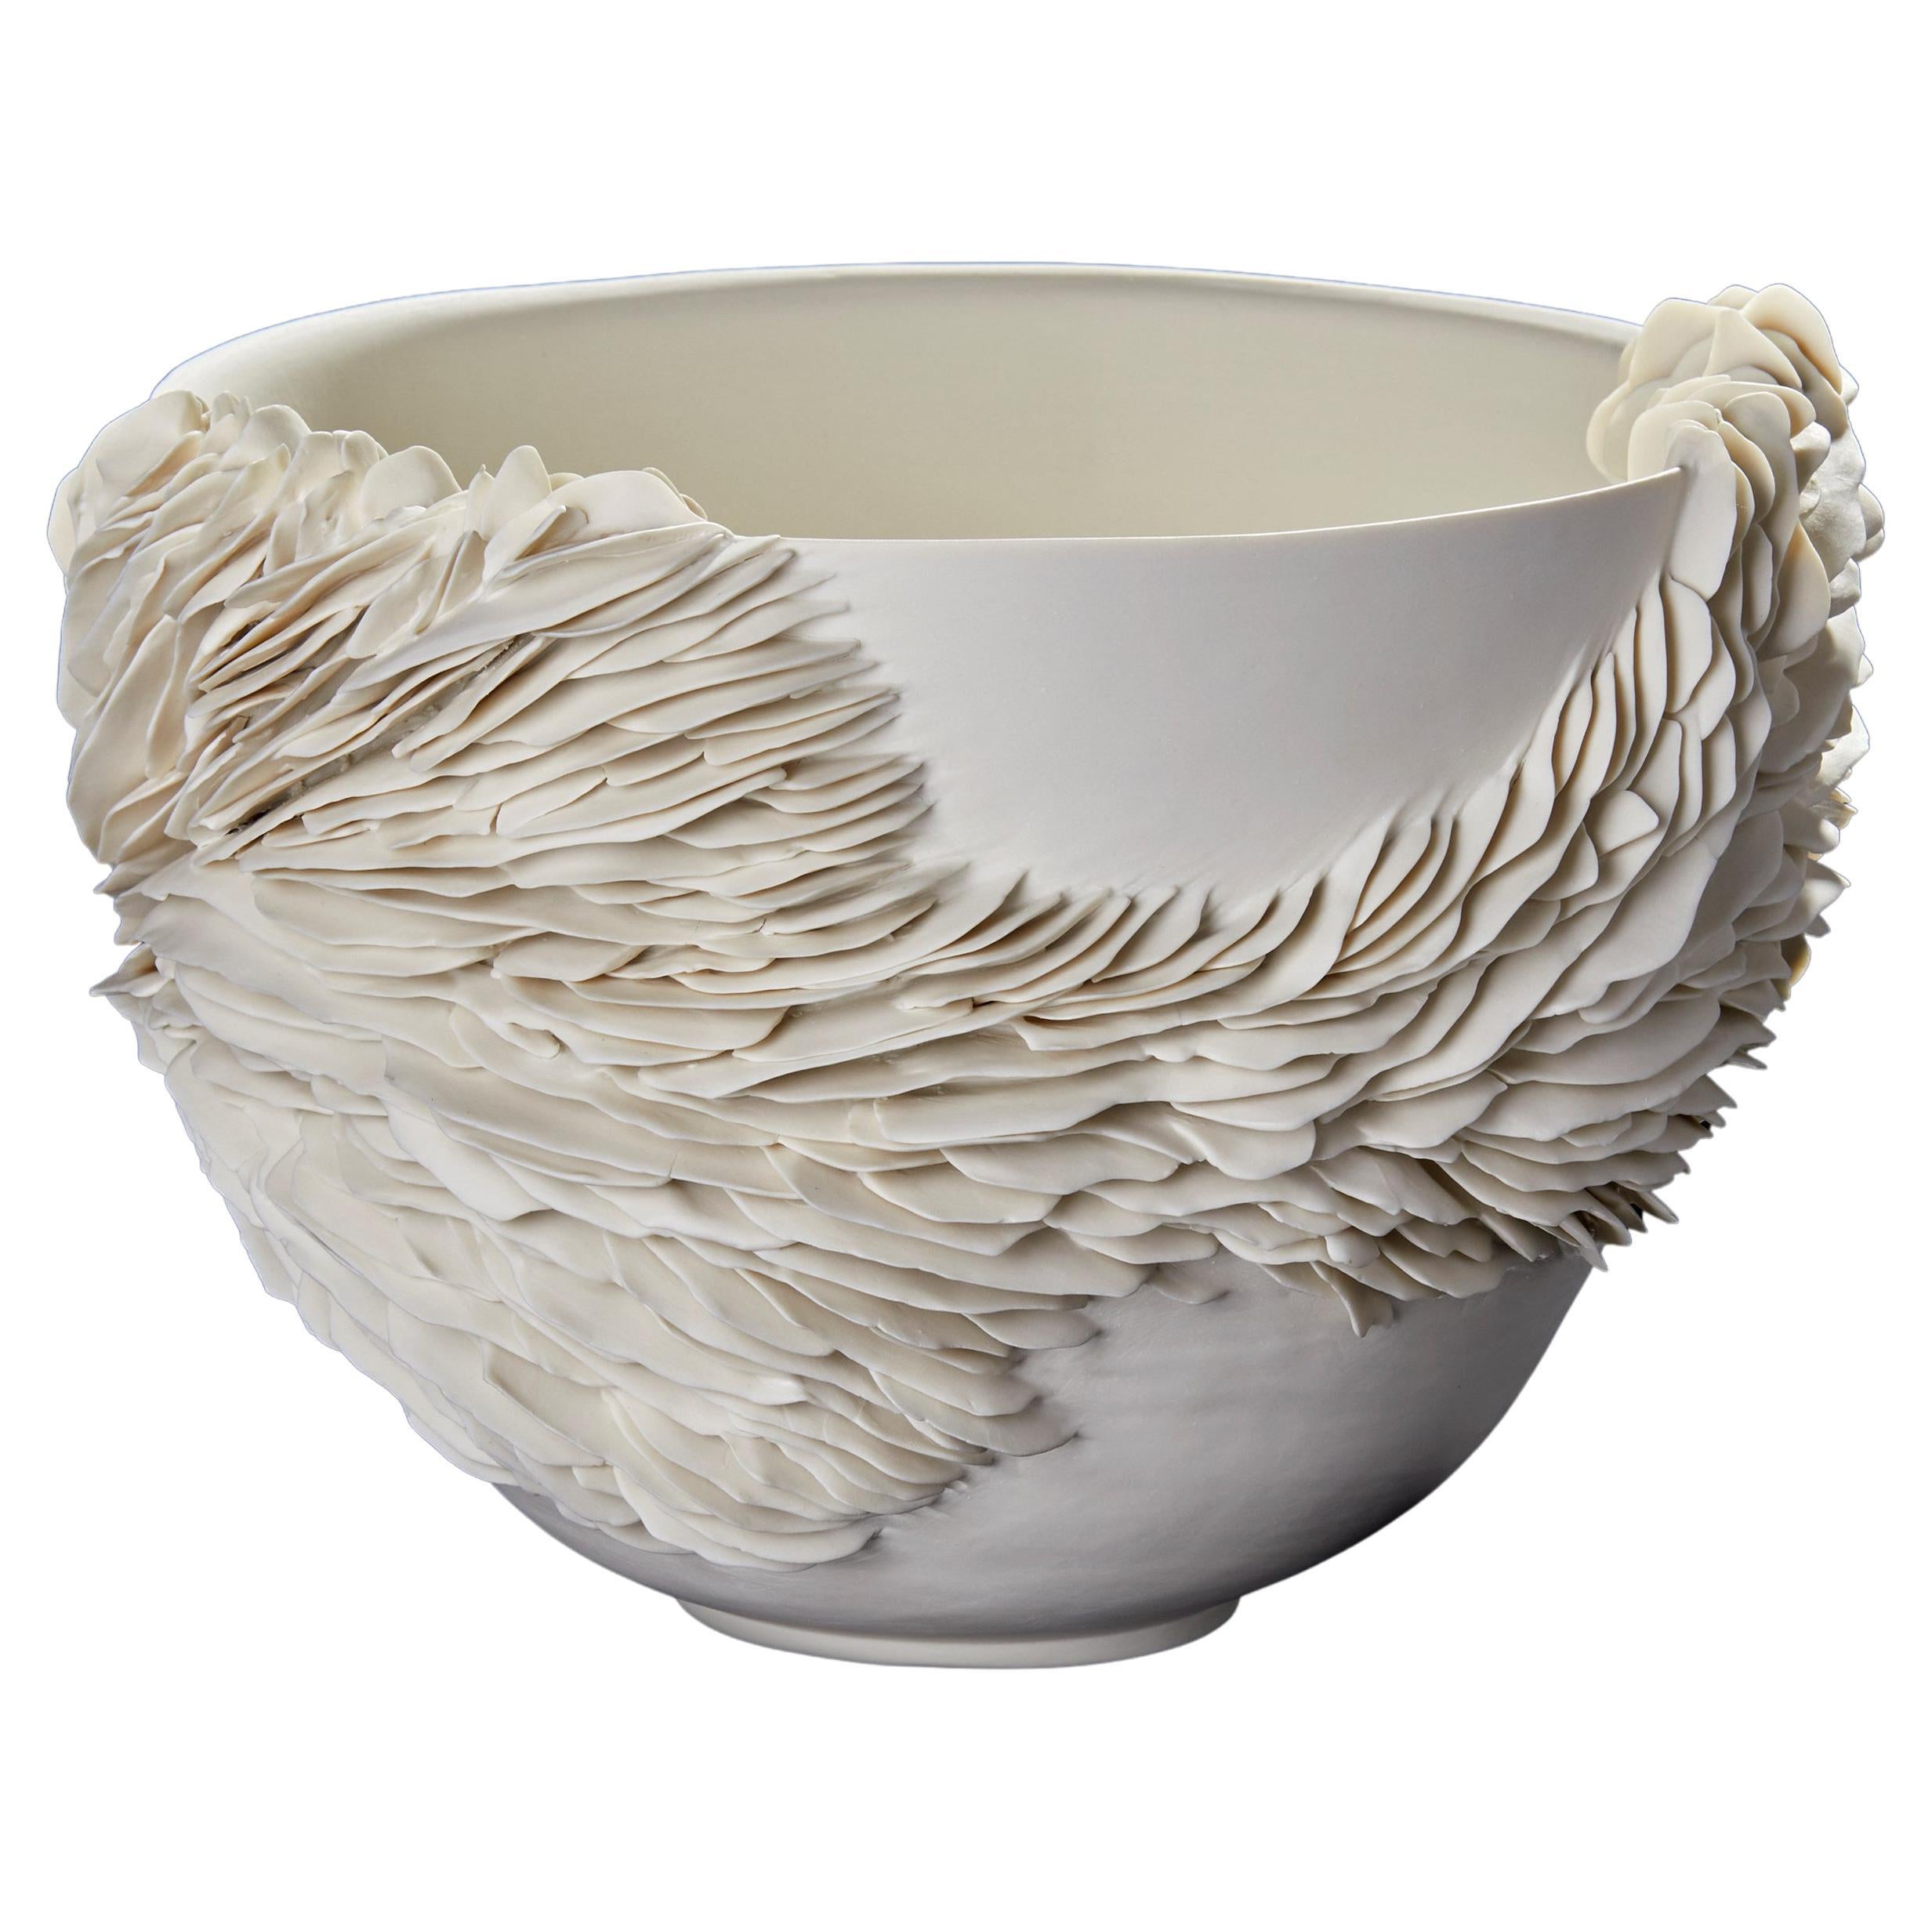 Wide Wrapping Bowl, a Unique Unglazed Porcelain Sculptural Bowl by Olivia Walker